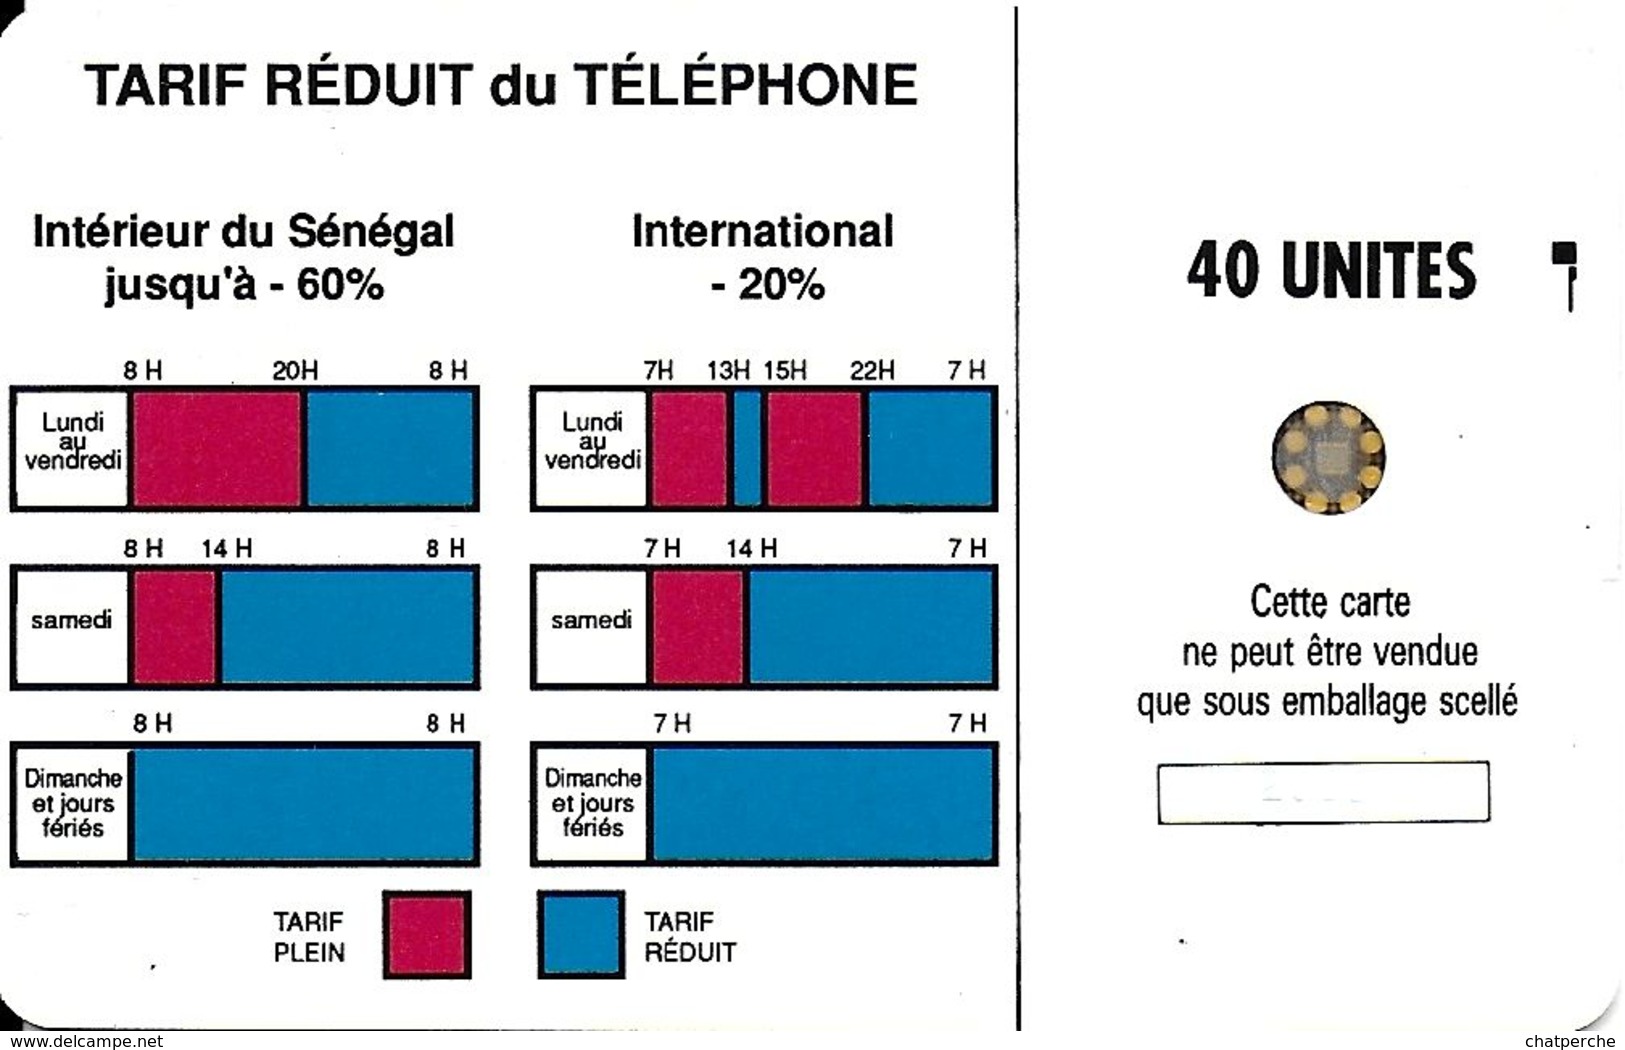 TELECARTE PHONECARD SENEGAL SONATEL 40 UNITES - Sénégal